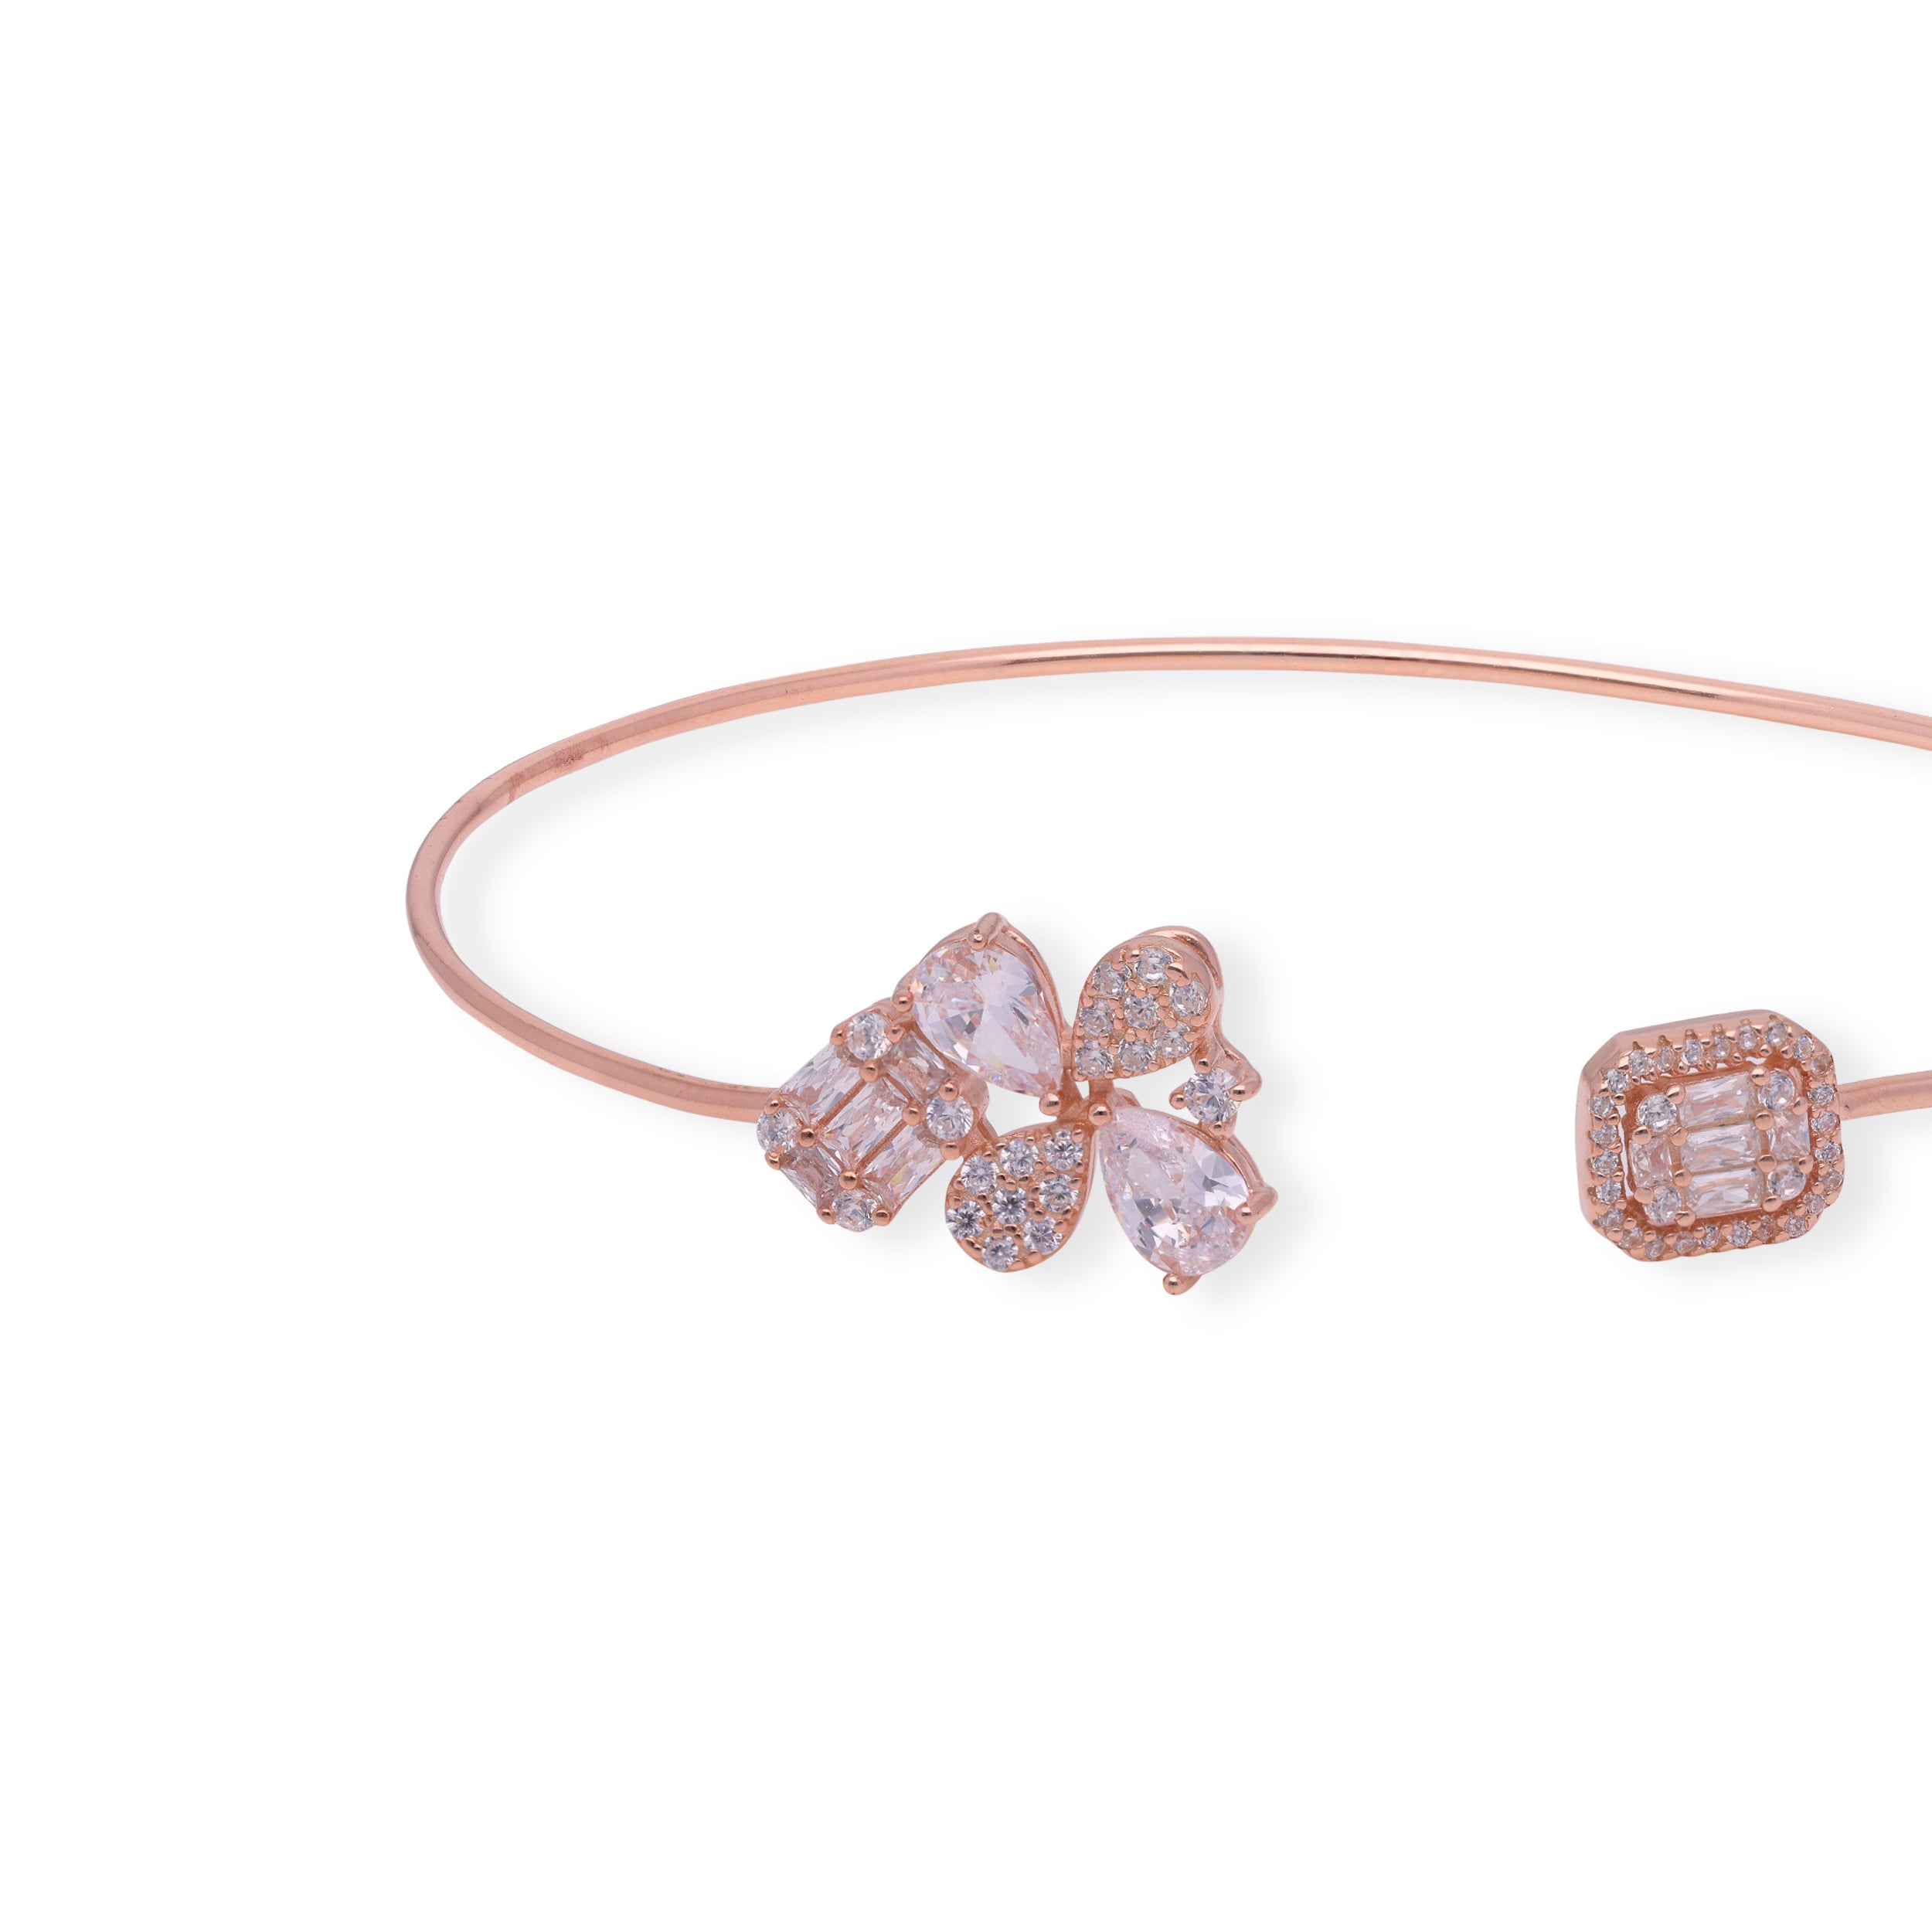 Elegant Rose Glow: Open Oval Sterling Silver Bracelet with Cubic Zirconia in Rose Gold | SKU : 0019889108, 0019889092, 0003111819